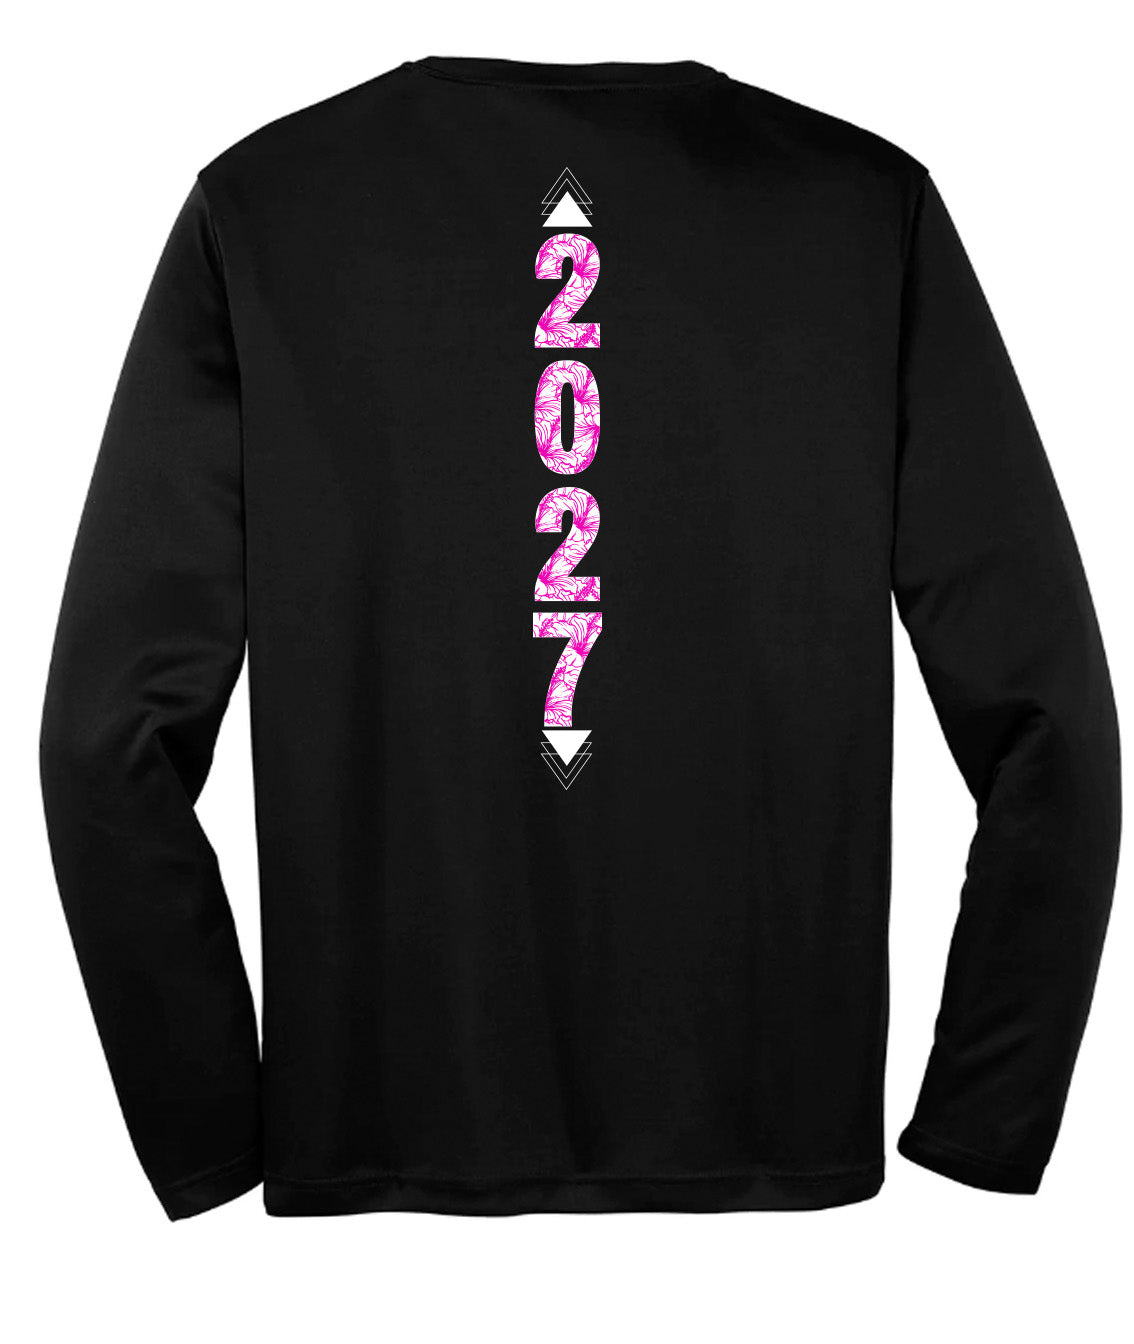 Class of 2027 Long-Sleeve Dri-Fit Shirt